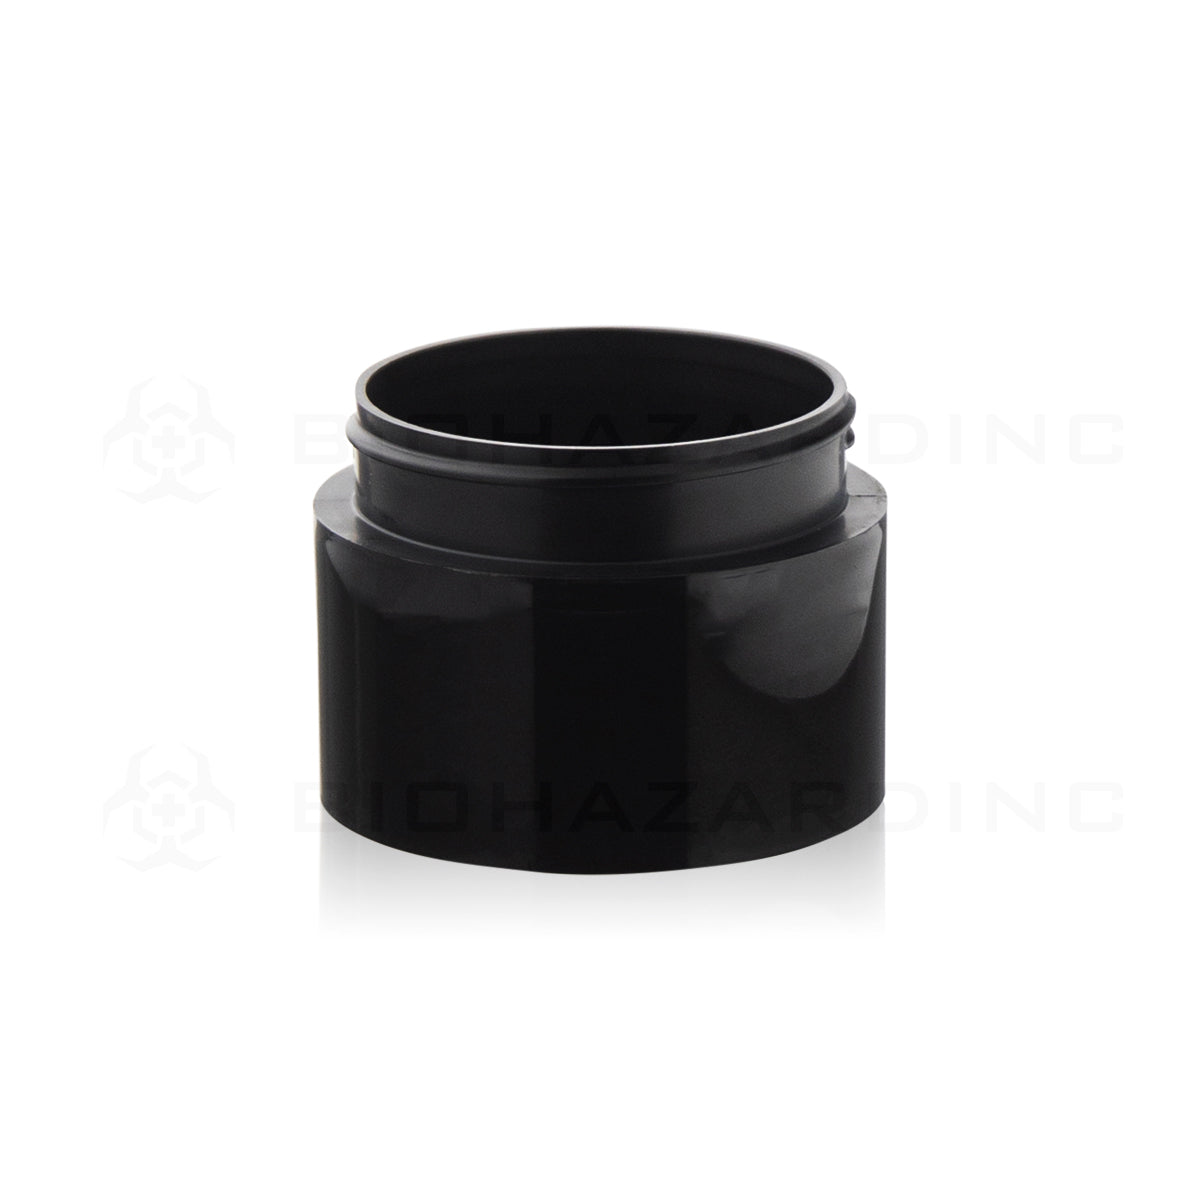 Plastic Jar | Straight Sided Plastic Jars - Black | 63mm - 3oz - 385 Count Plastic Jar Biohazard Inc   